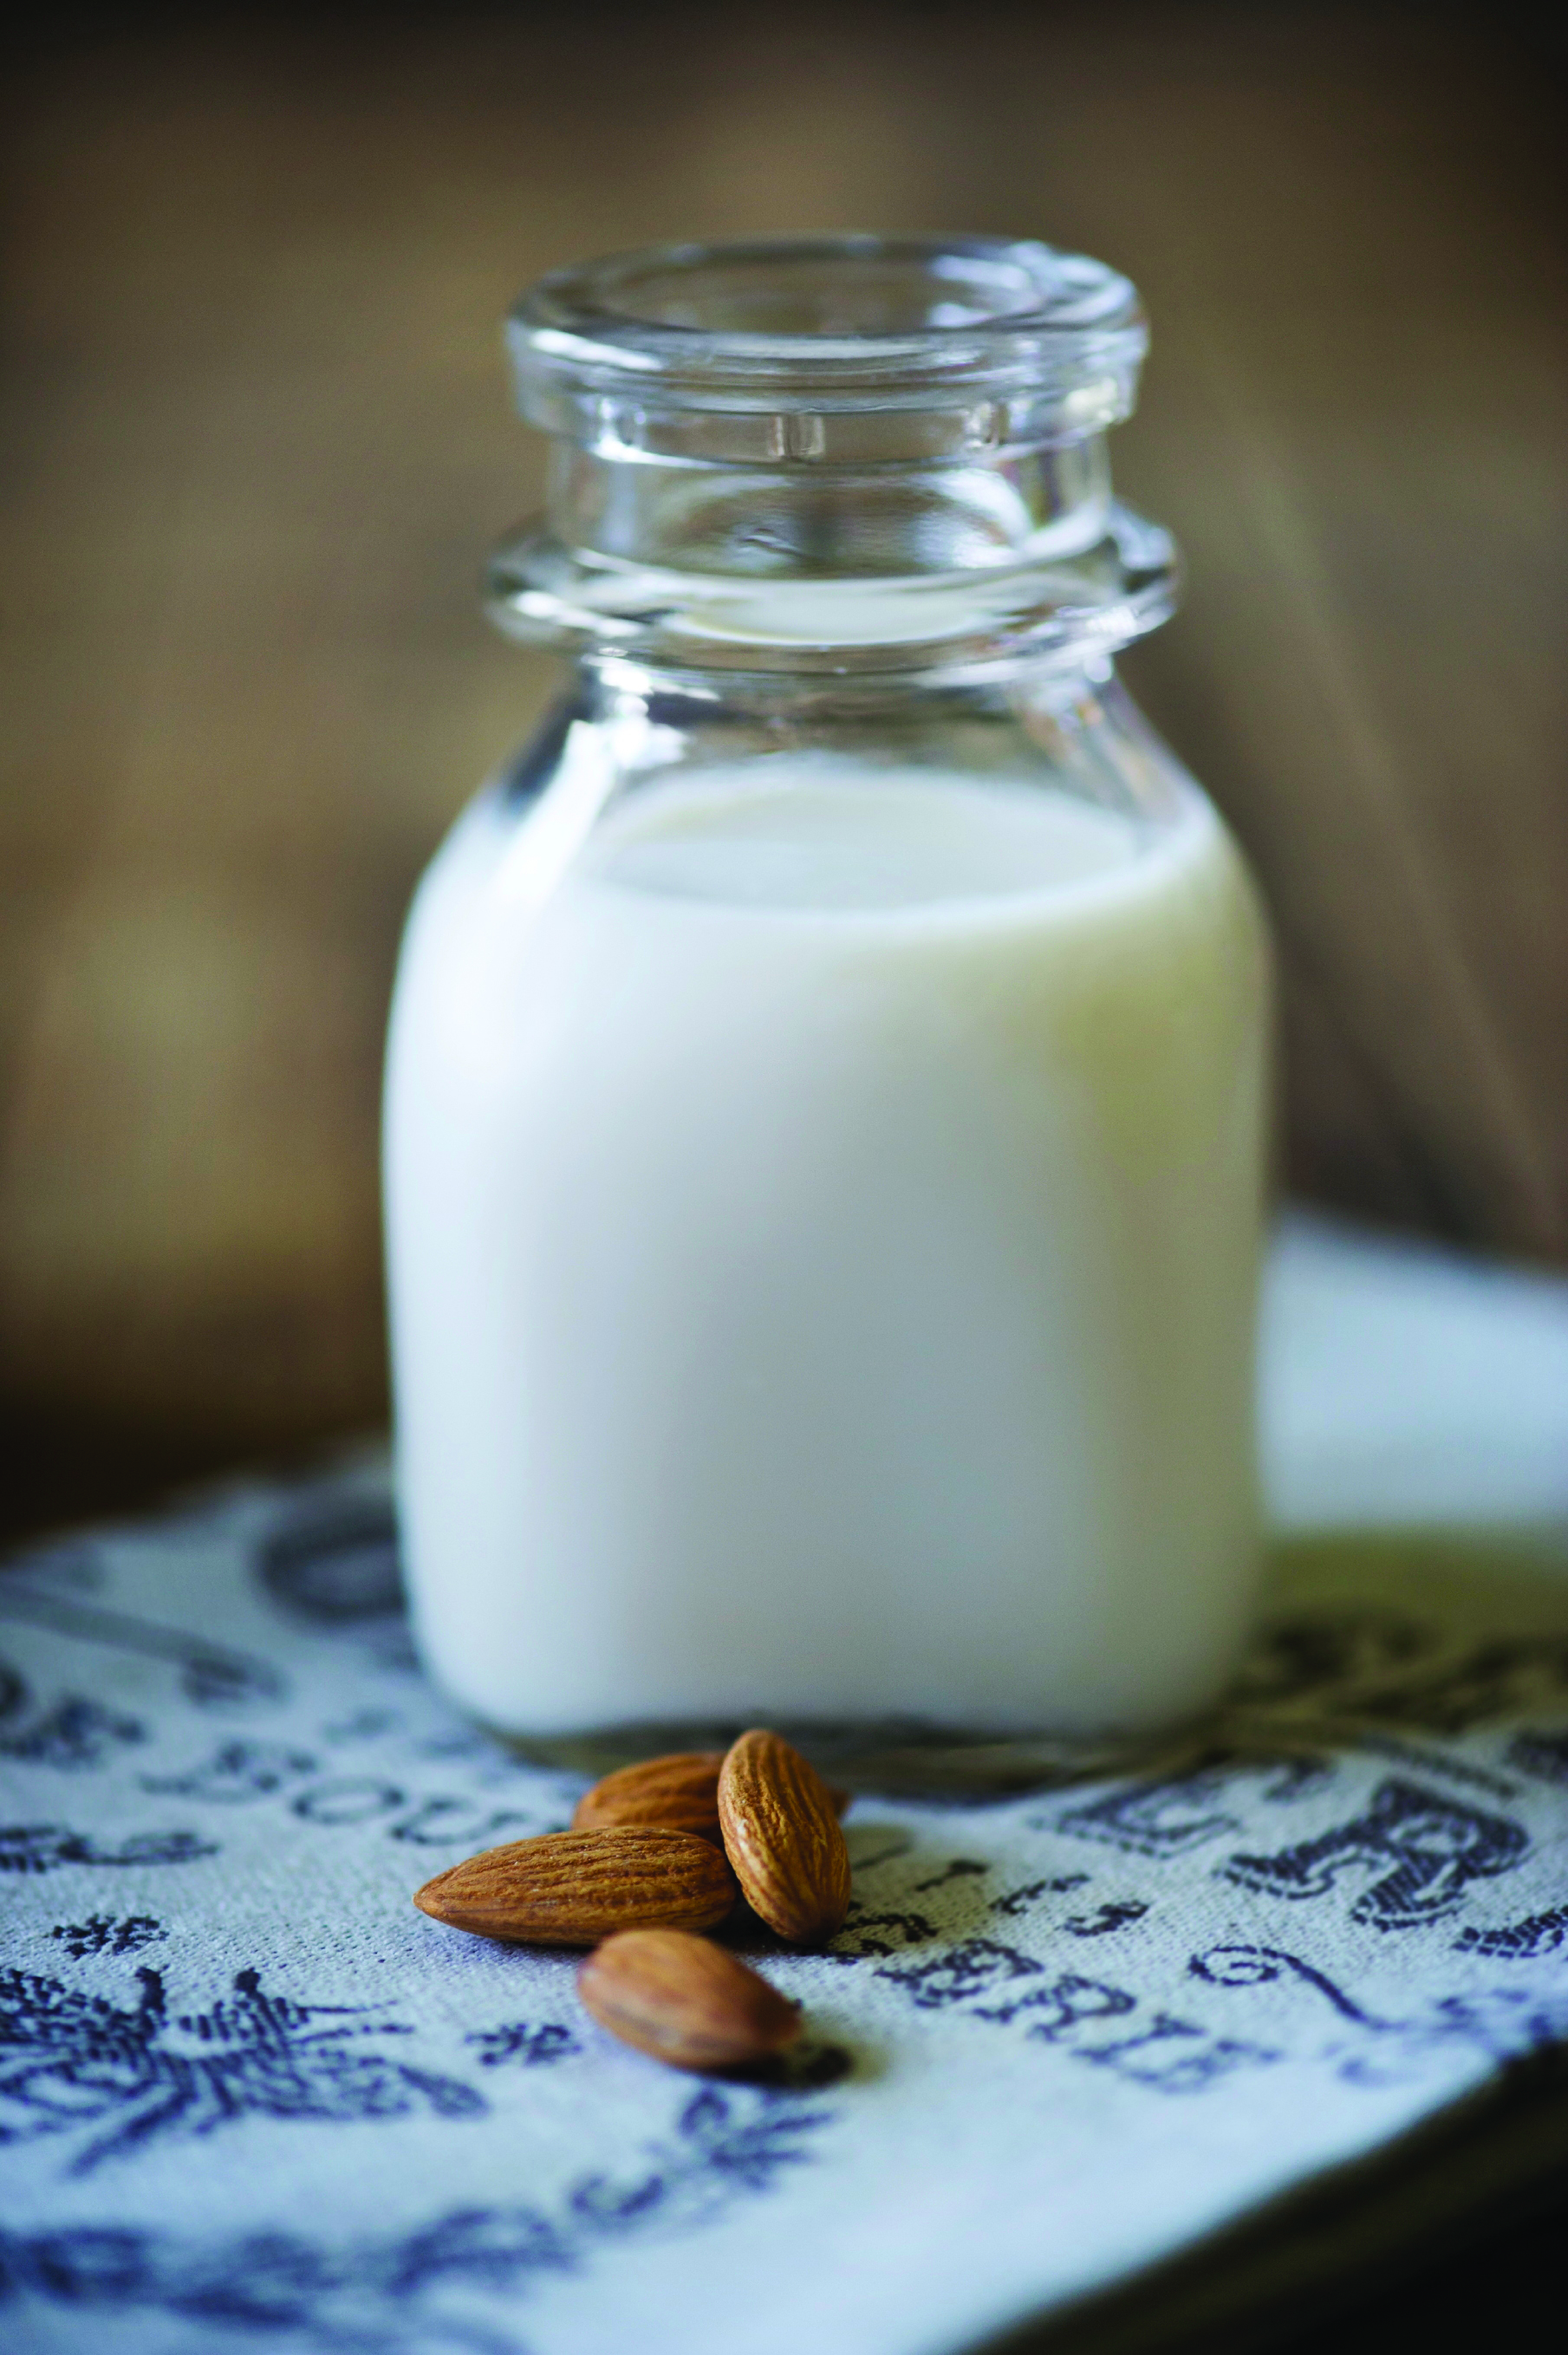 Almond milk_iStock_000061125490_Large